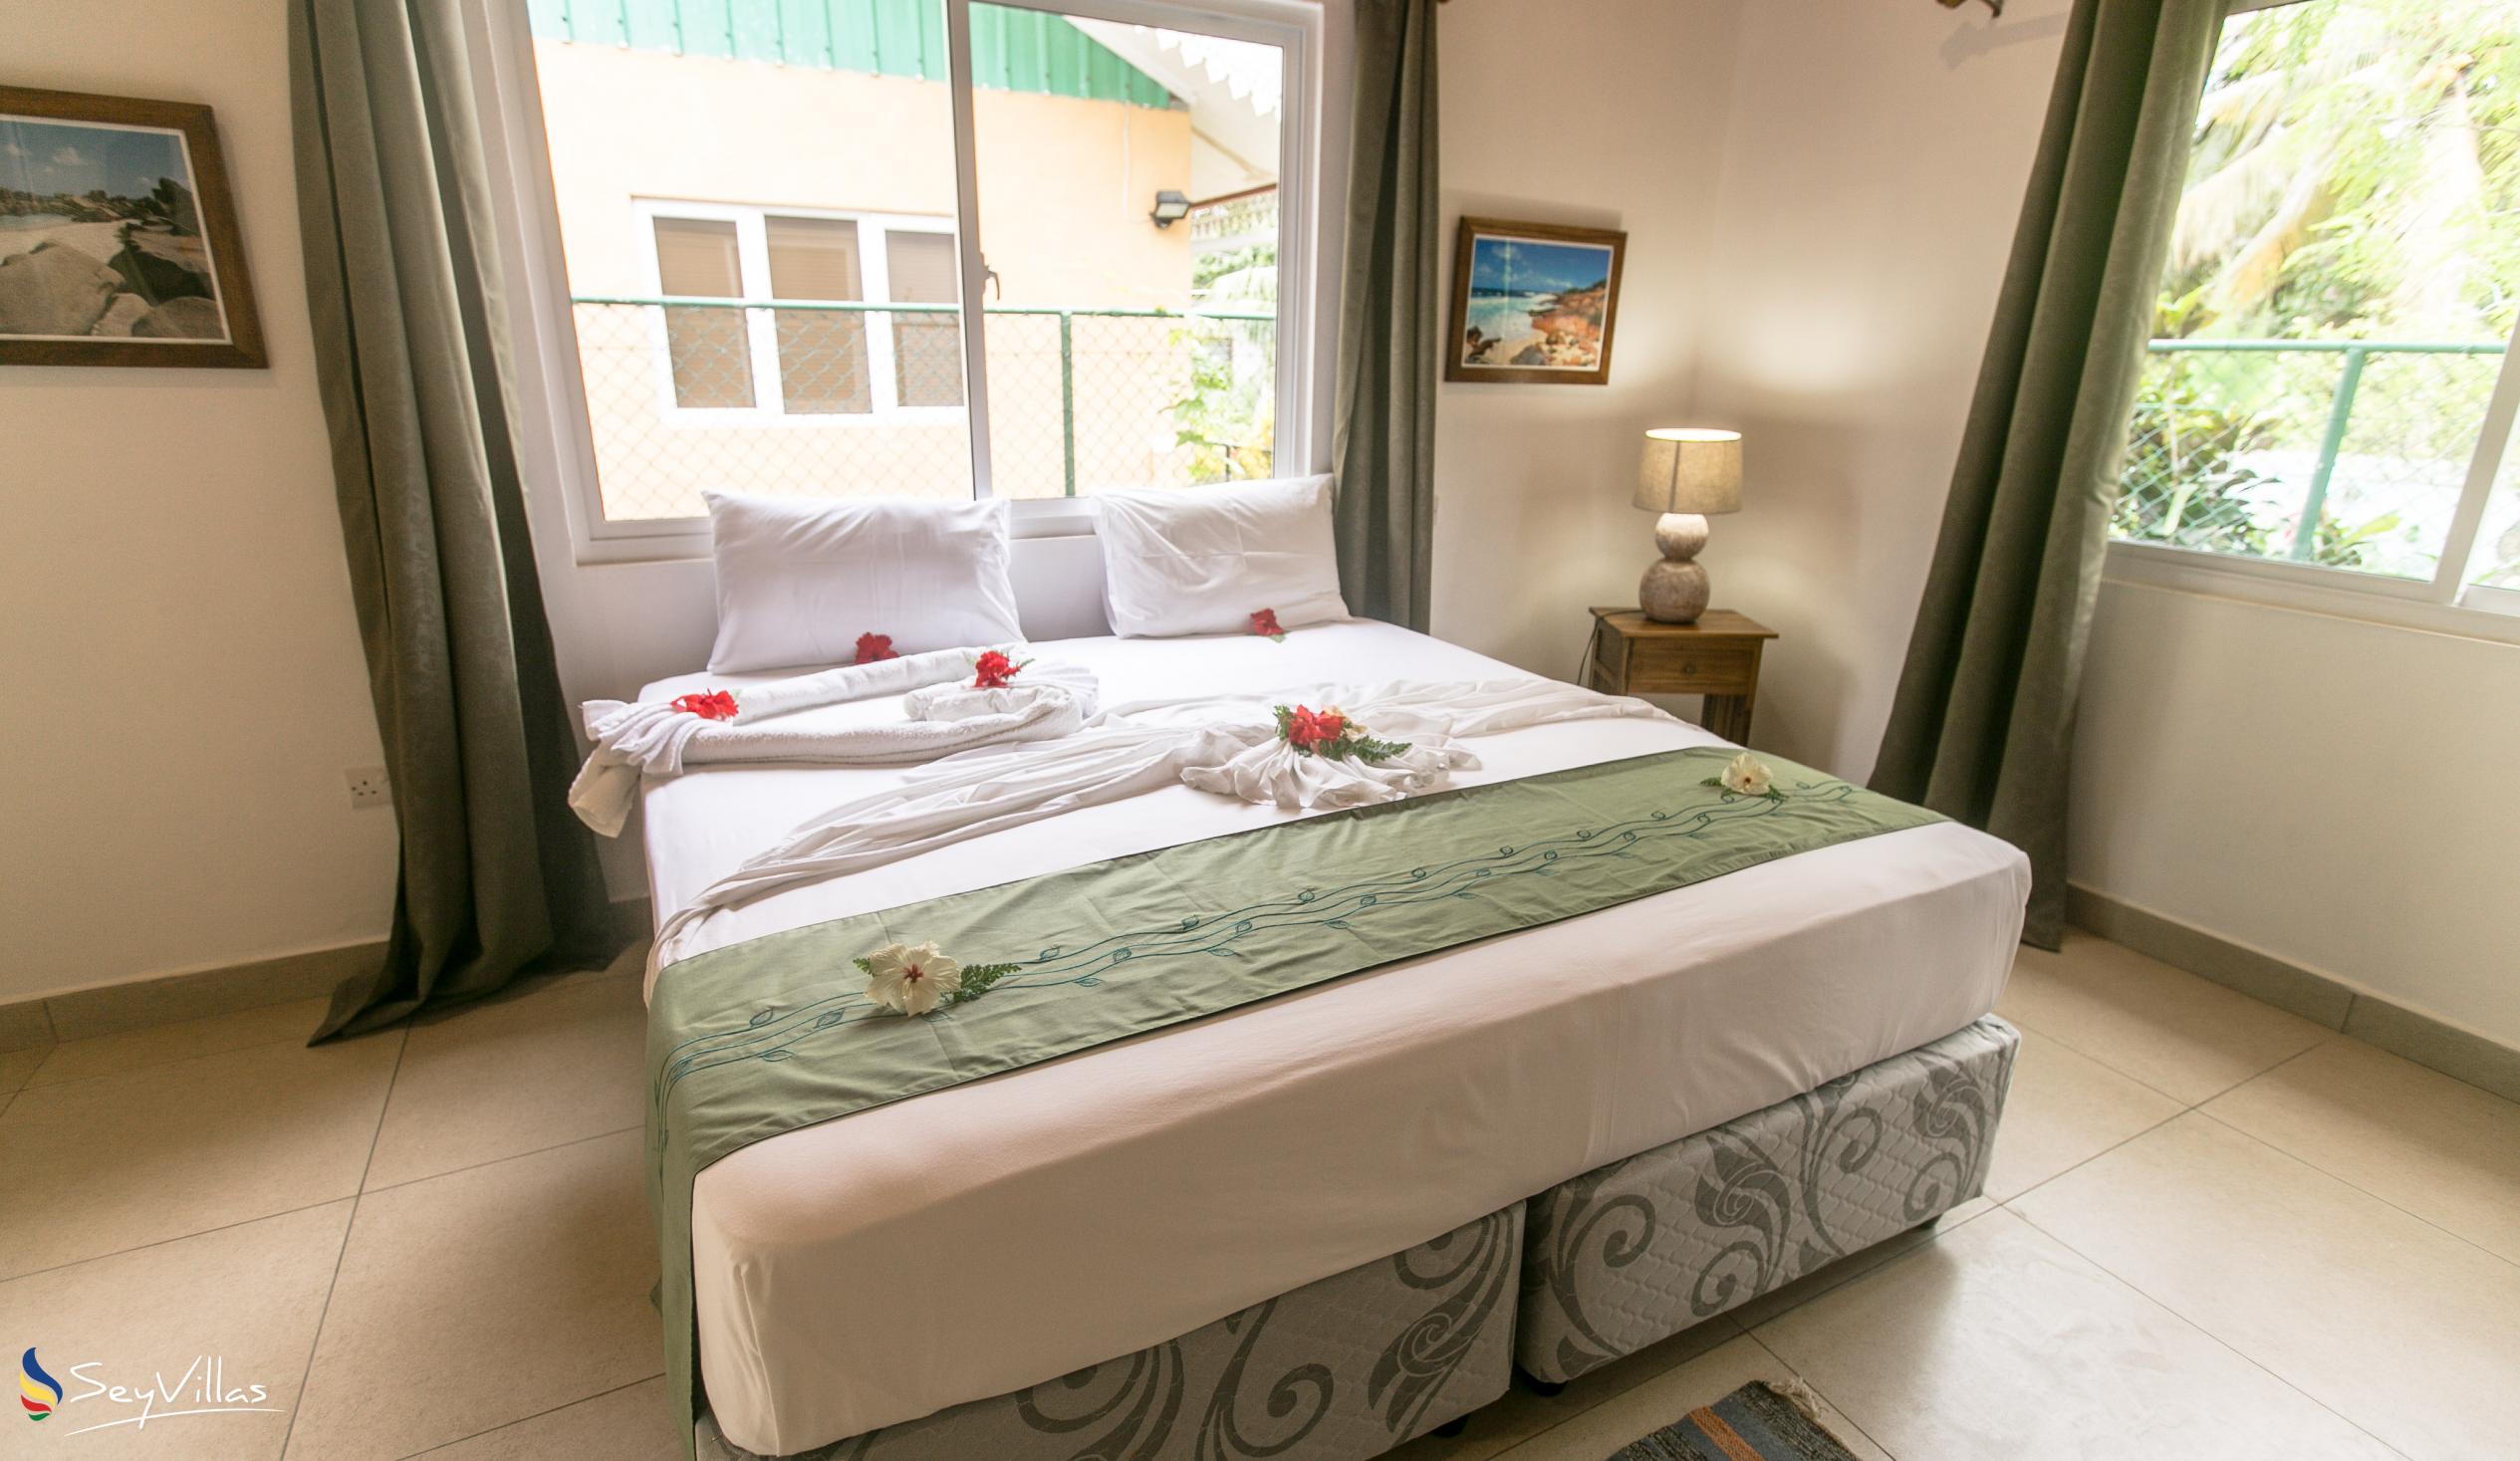 Photo 84: Pension Fidele - Koko ver & Koko rouz Apartments - La Digue (Seychelles)